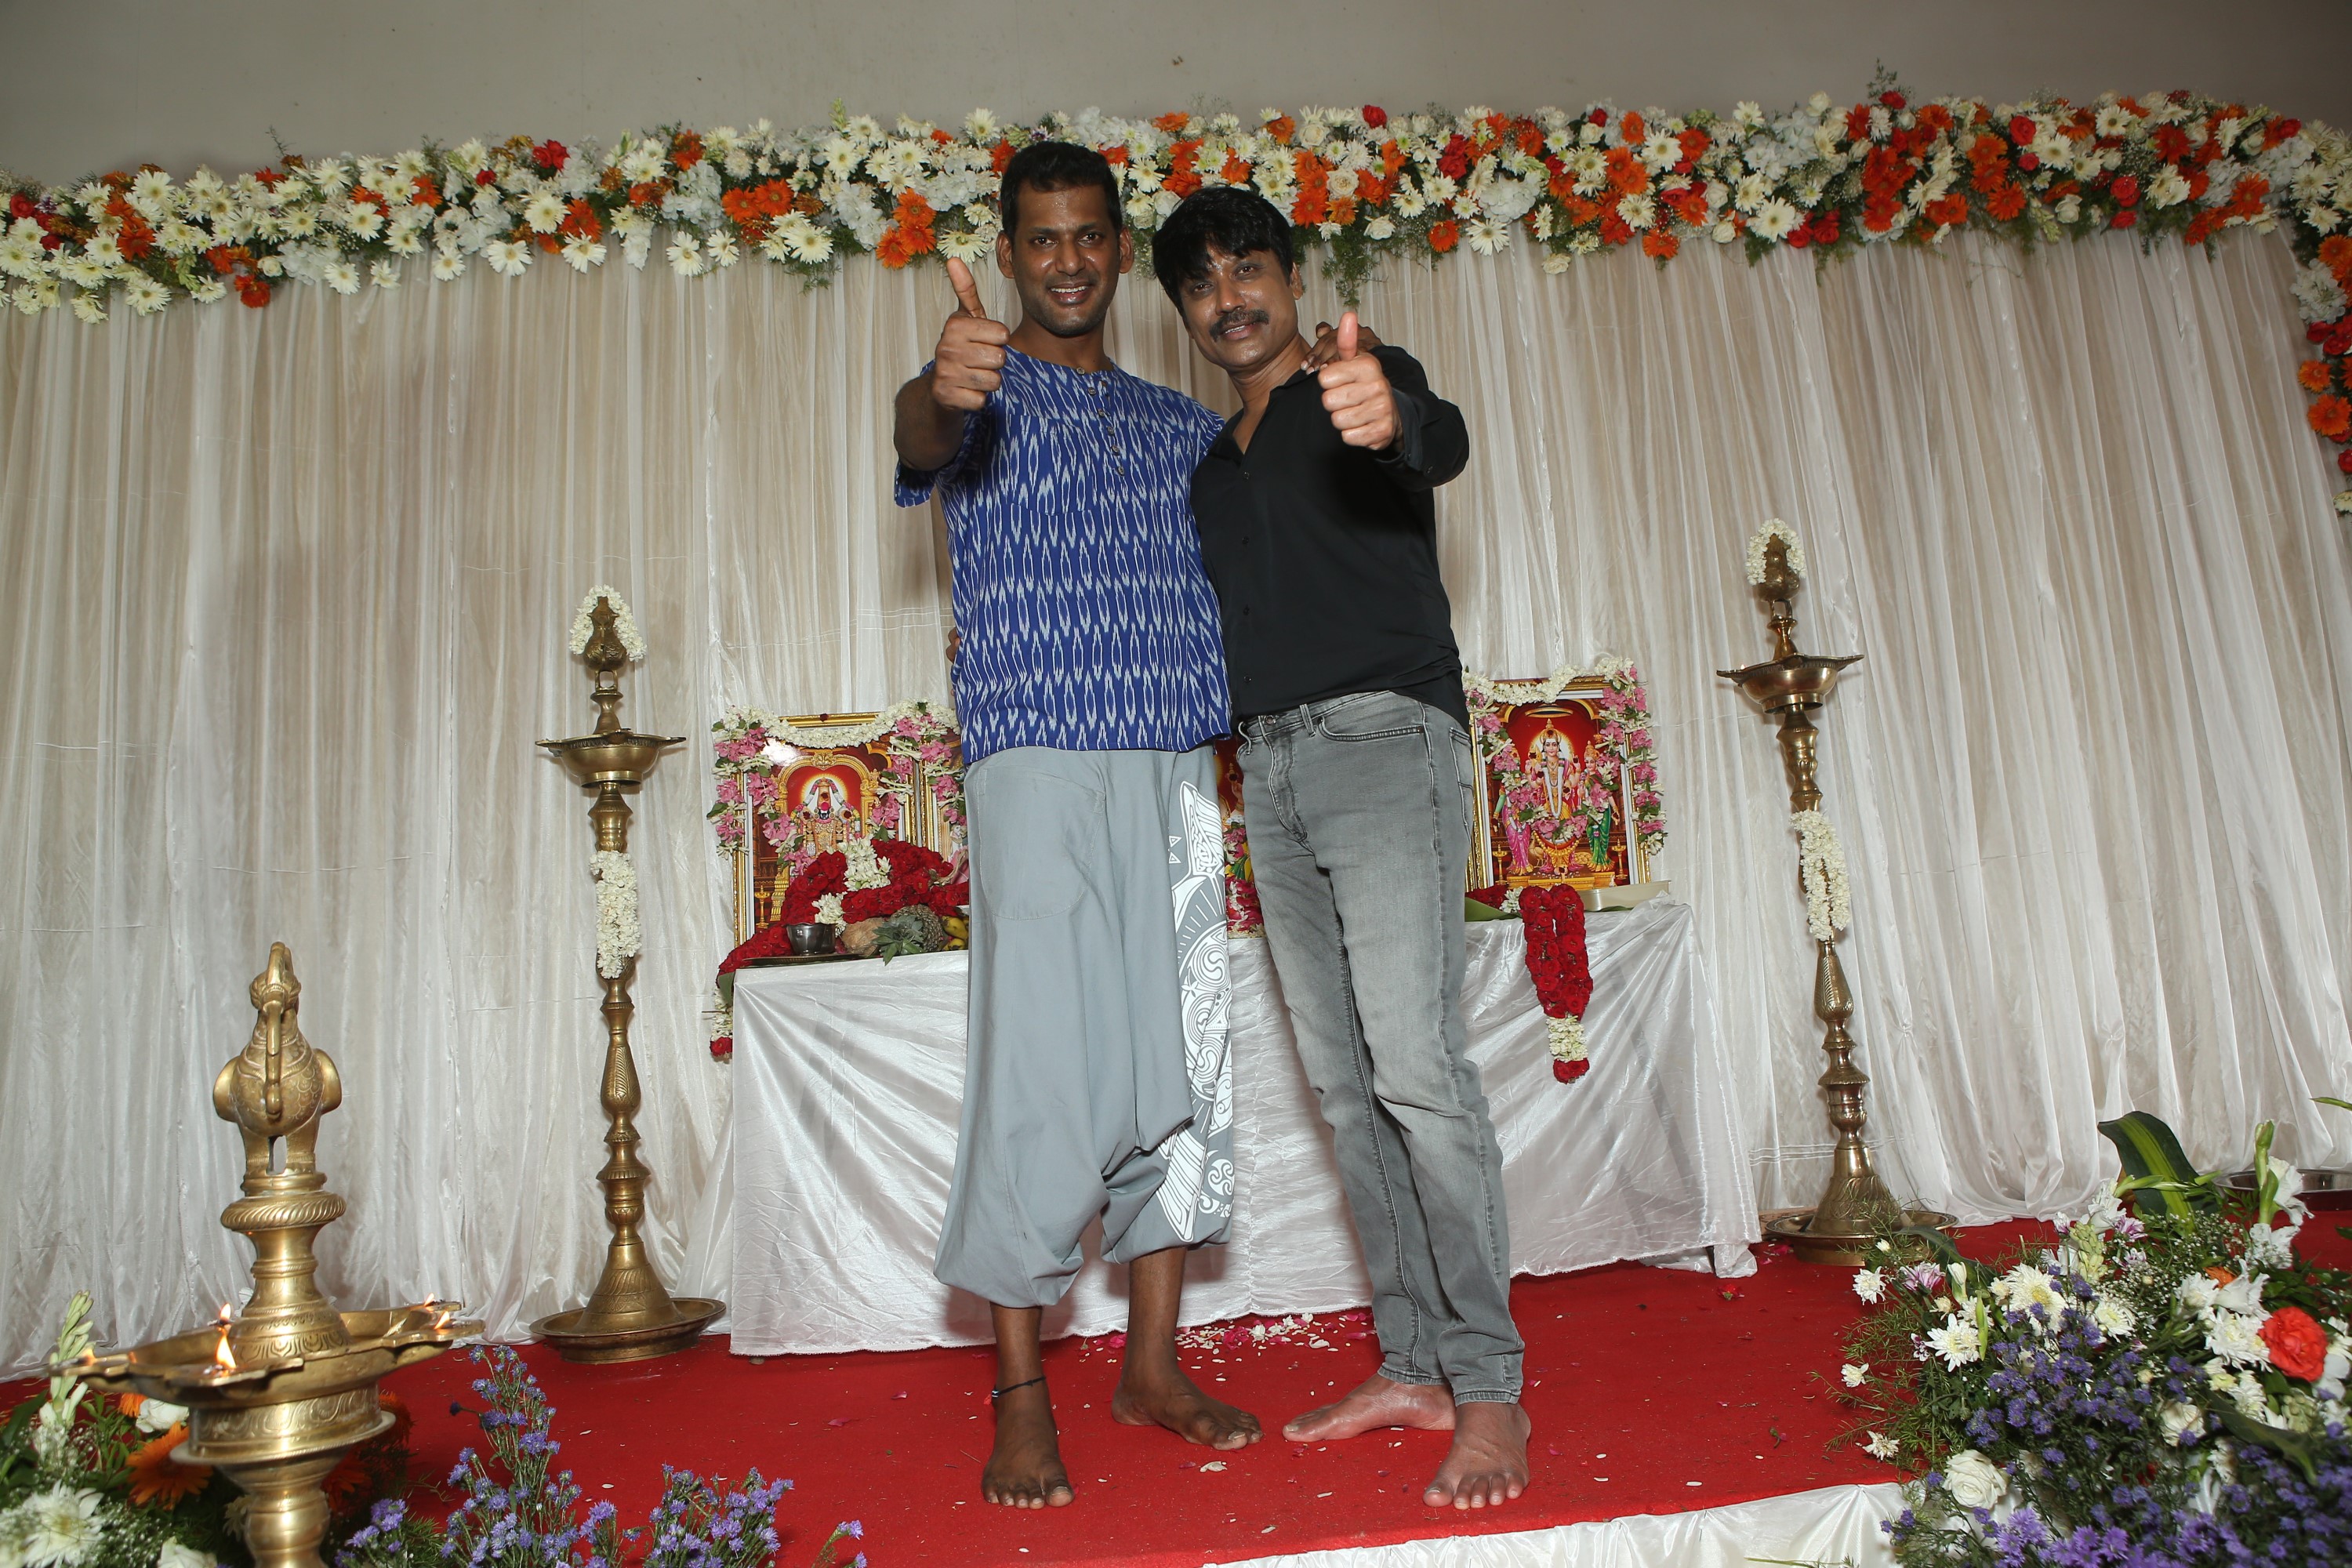 Vishal and SJ Suryah 'Mark Antony' shoot with pooja today!